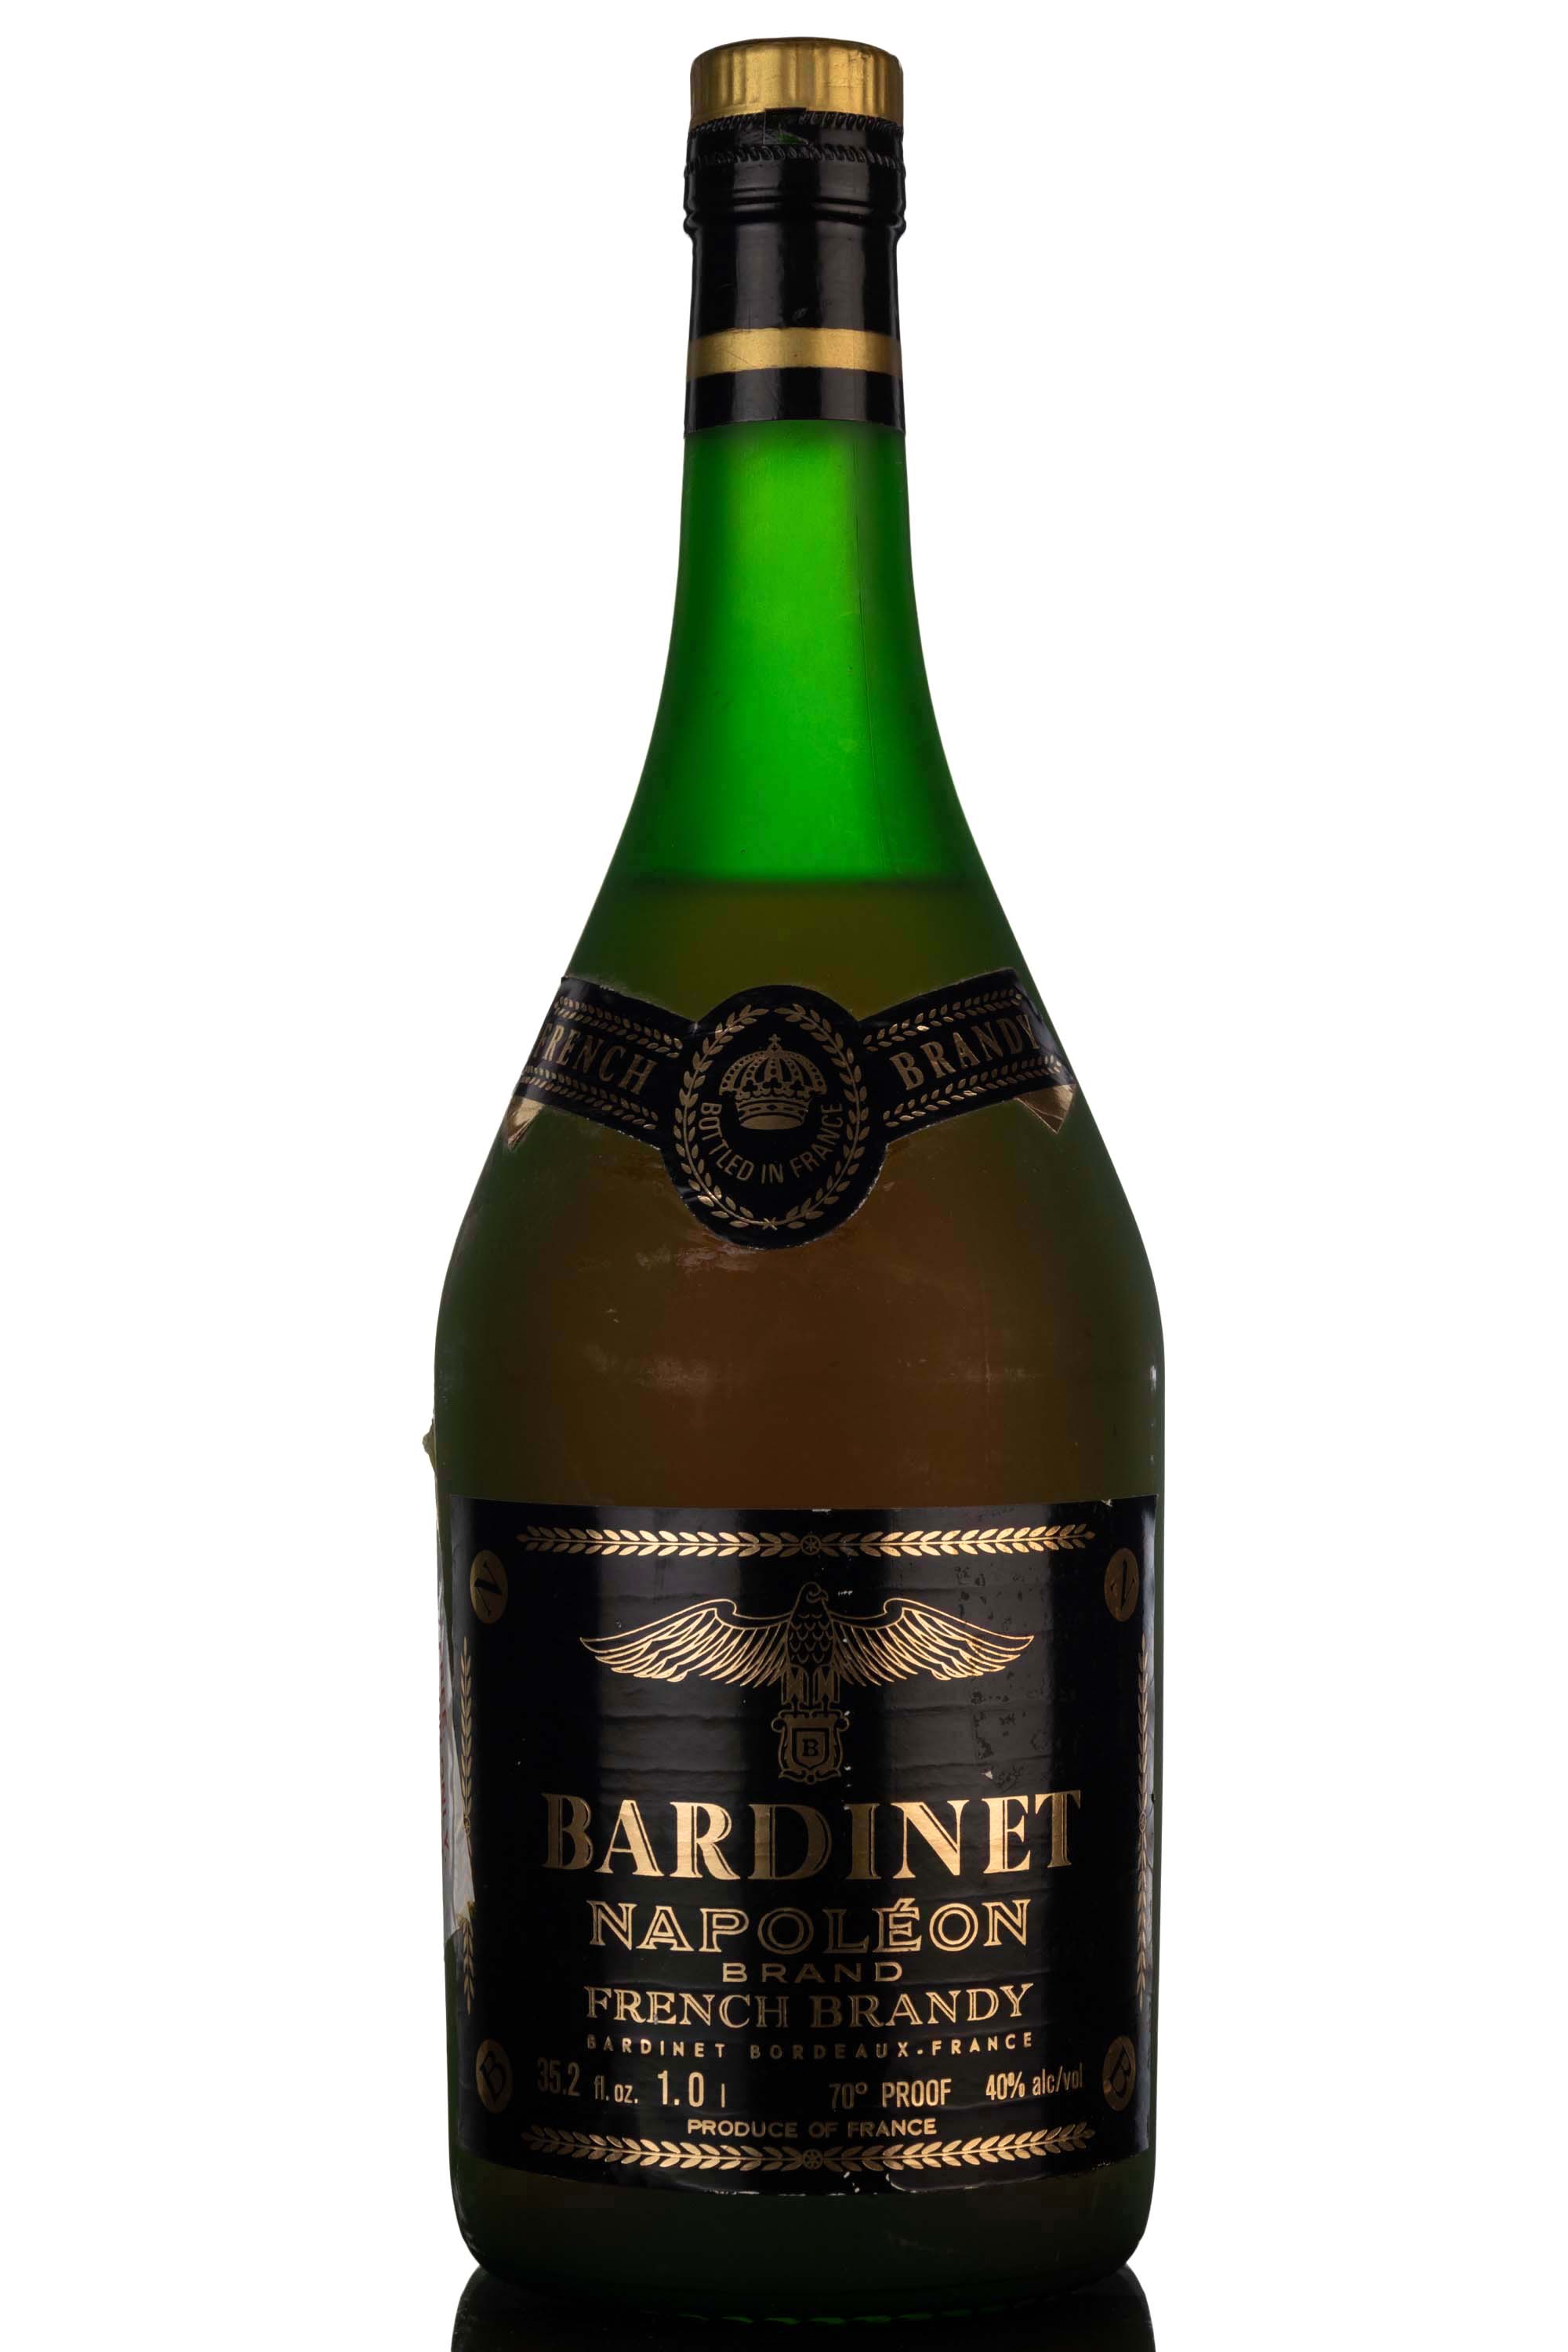 Bardinet Napoleon Brandy - Late 1970s - 1 Litre